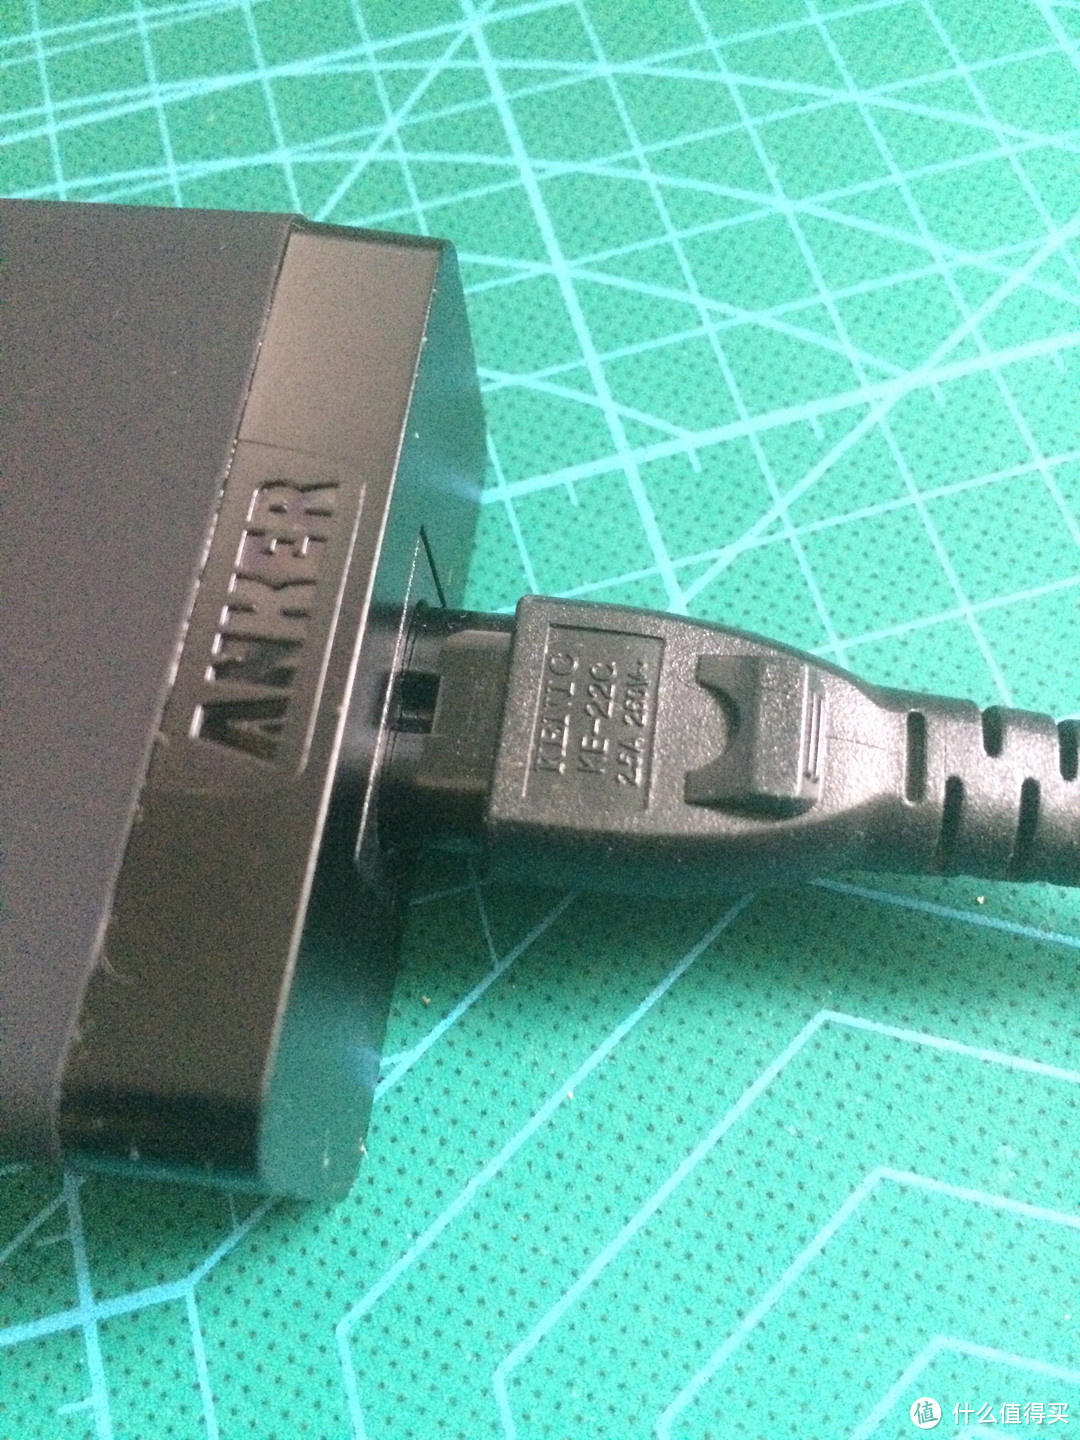 Anker PowerIQ 40W 5口USB充电器